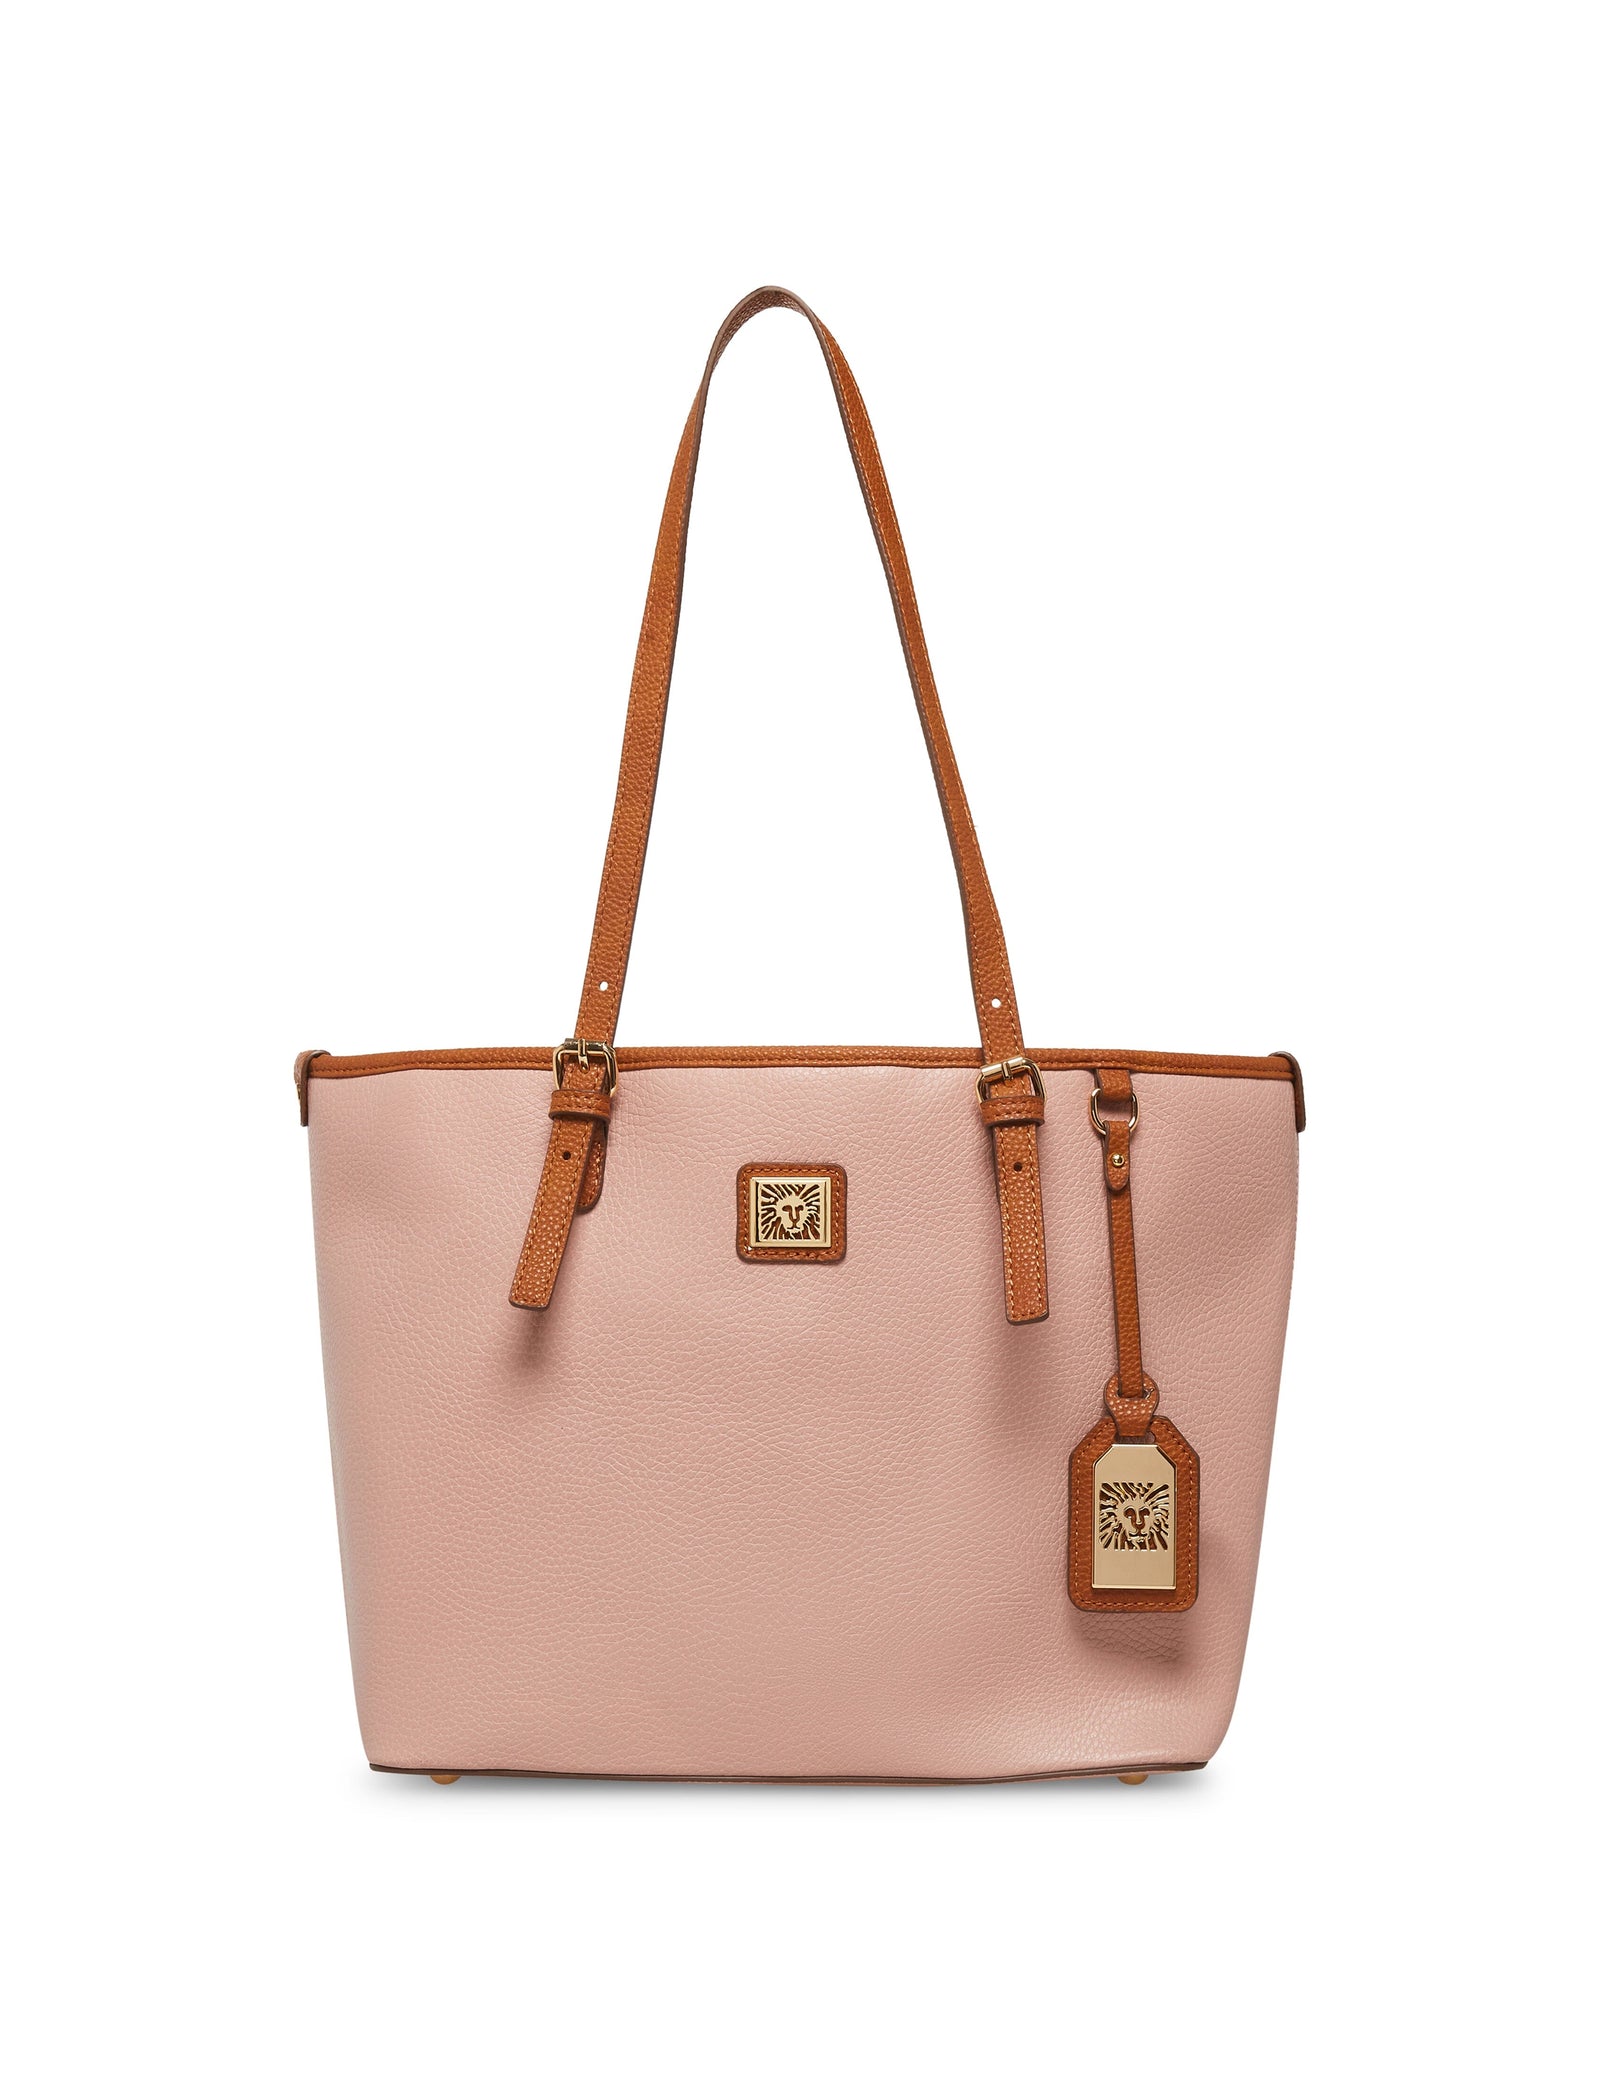 Anne Klein Purses & Handbags | Boscov's